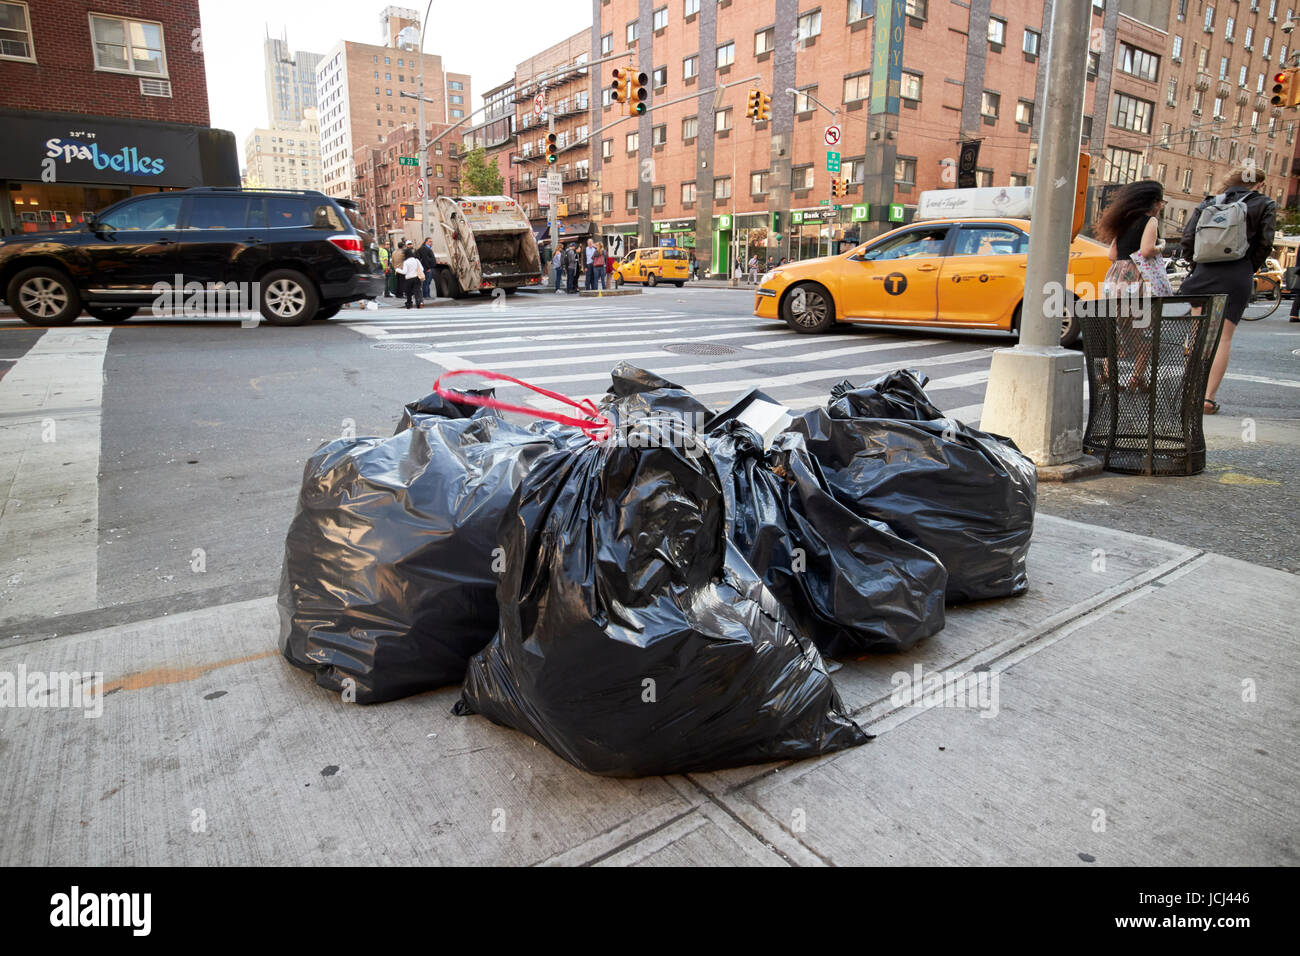 https://c8.alamy.com/comp/JCJ446/garbage-left-on-sidewalk-in-black-plastic-bags-for-collection-new-JCJ446.jpg